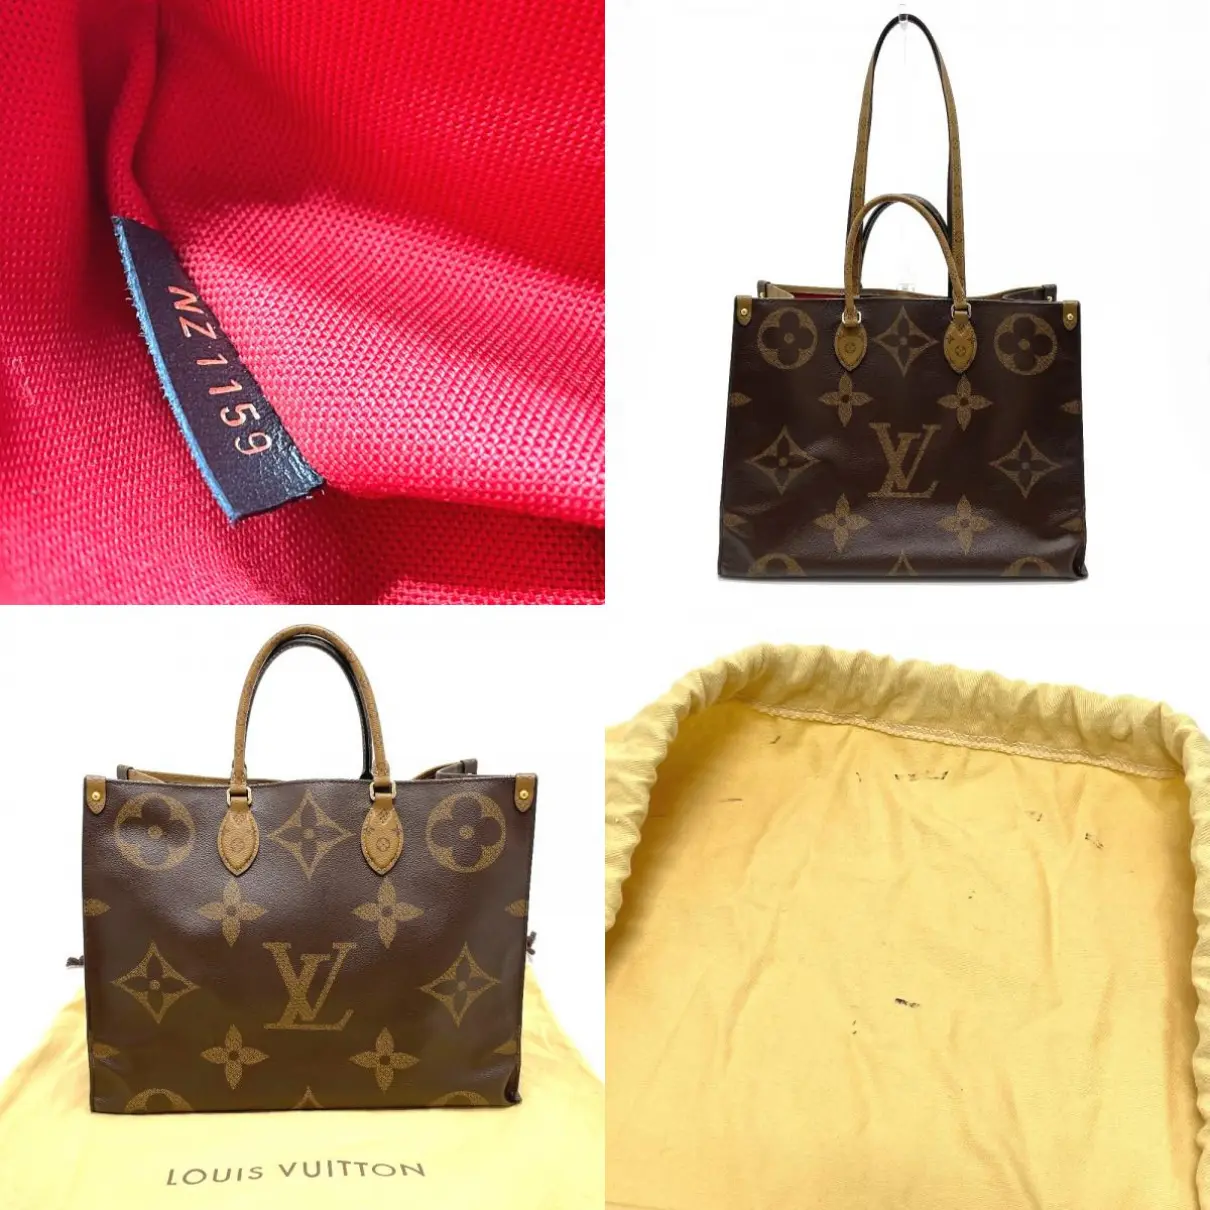 Buy Louis Vuitton Cloth tote online